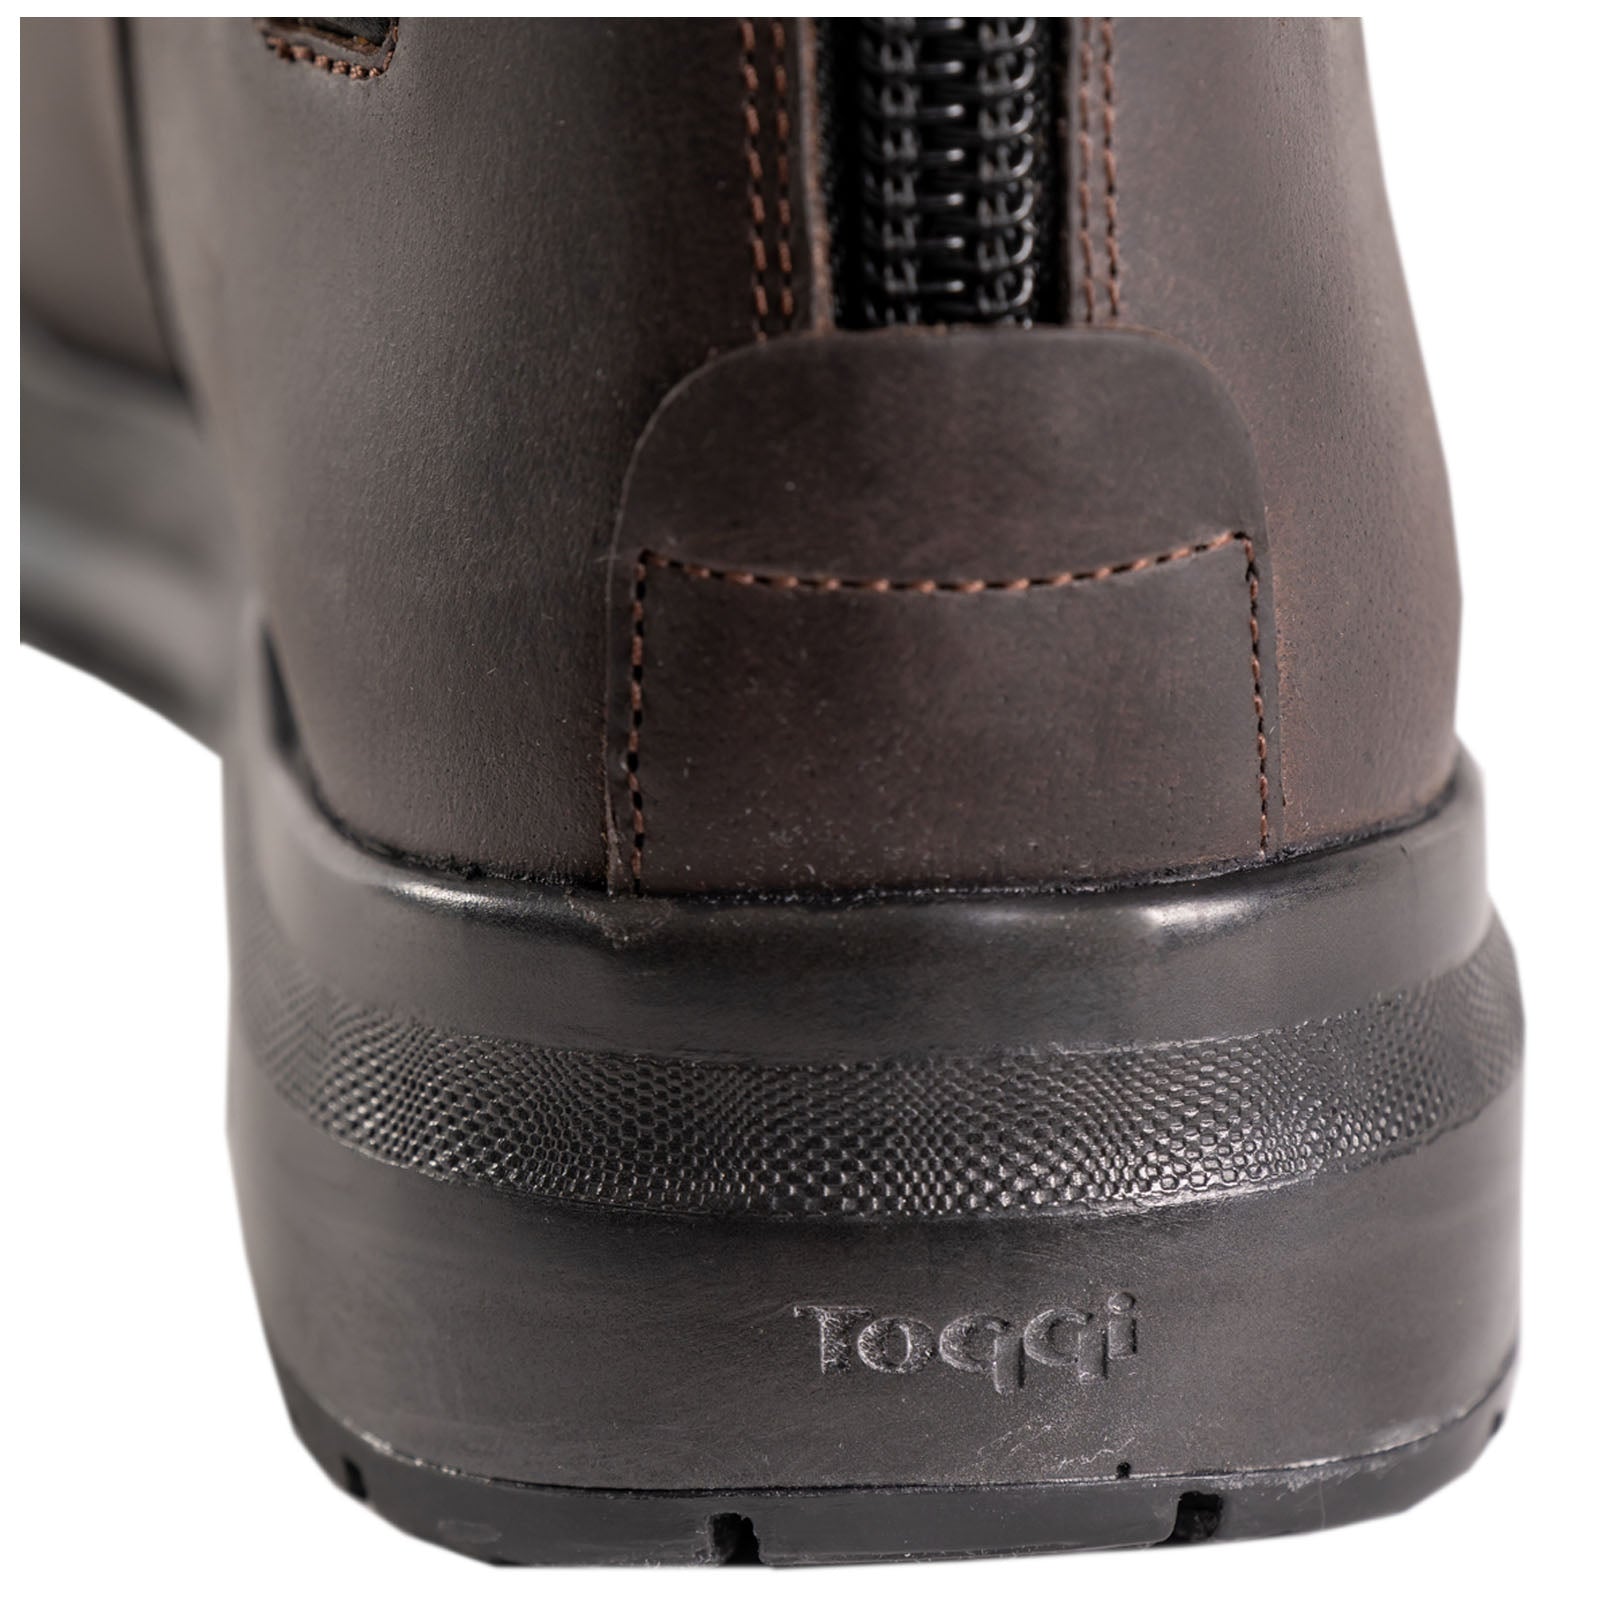 Toggi Unisex Calgary Pro Full Length Riding Boots